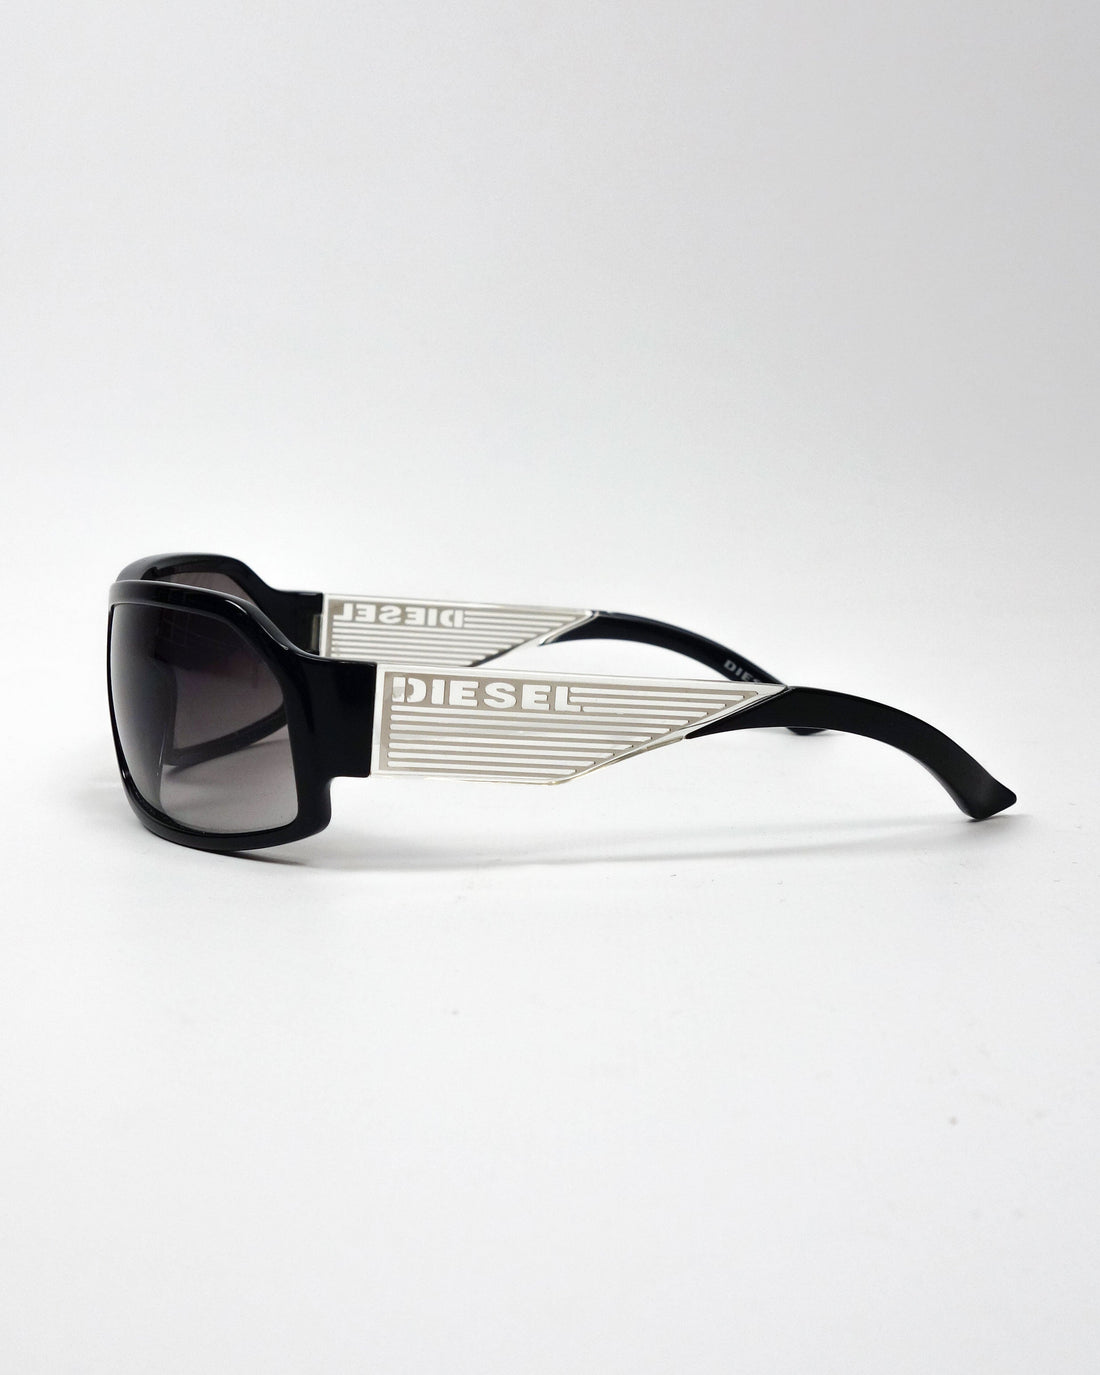 Diesel Black Translucid Logo Sunglasses 2000's